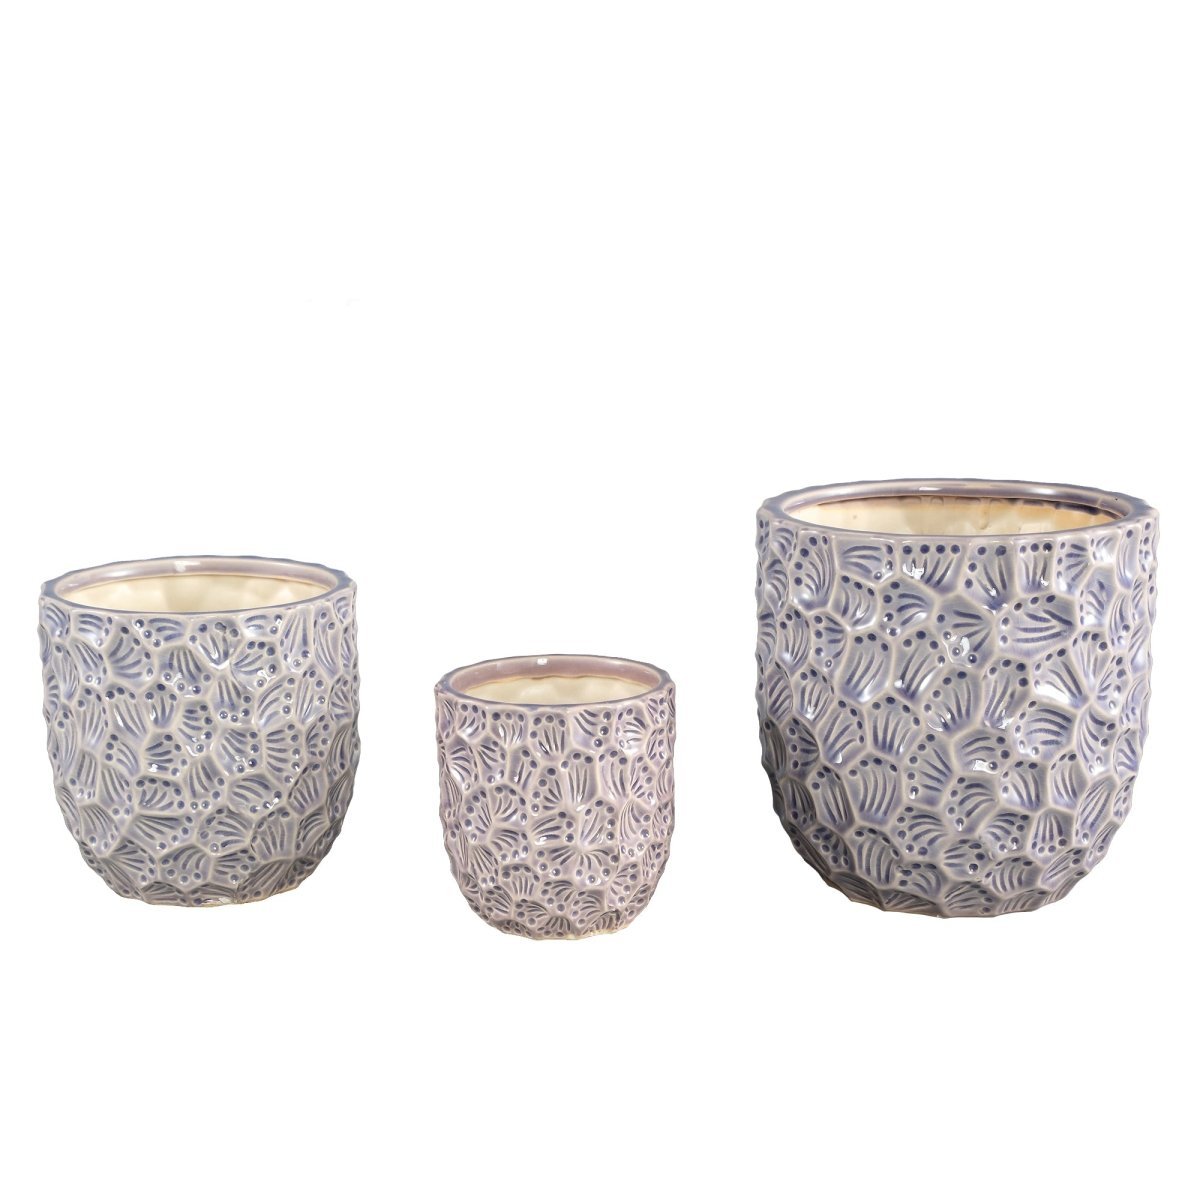 Keramiktopf - Nizo von PTMD - Esszett Luxury